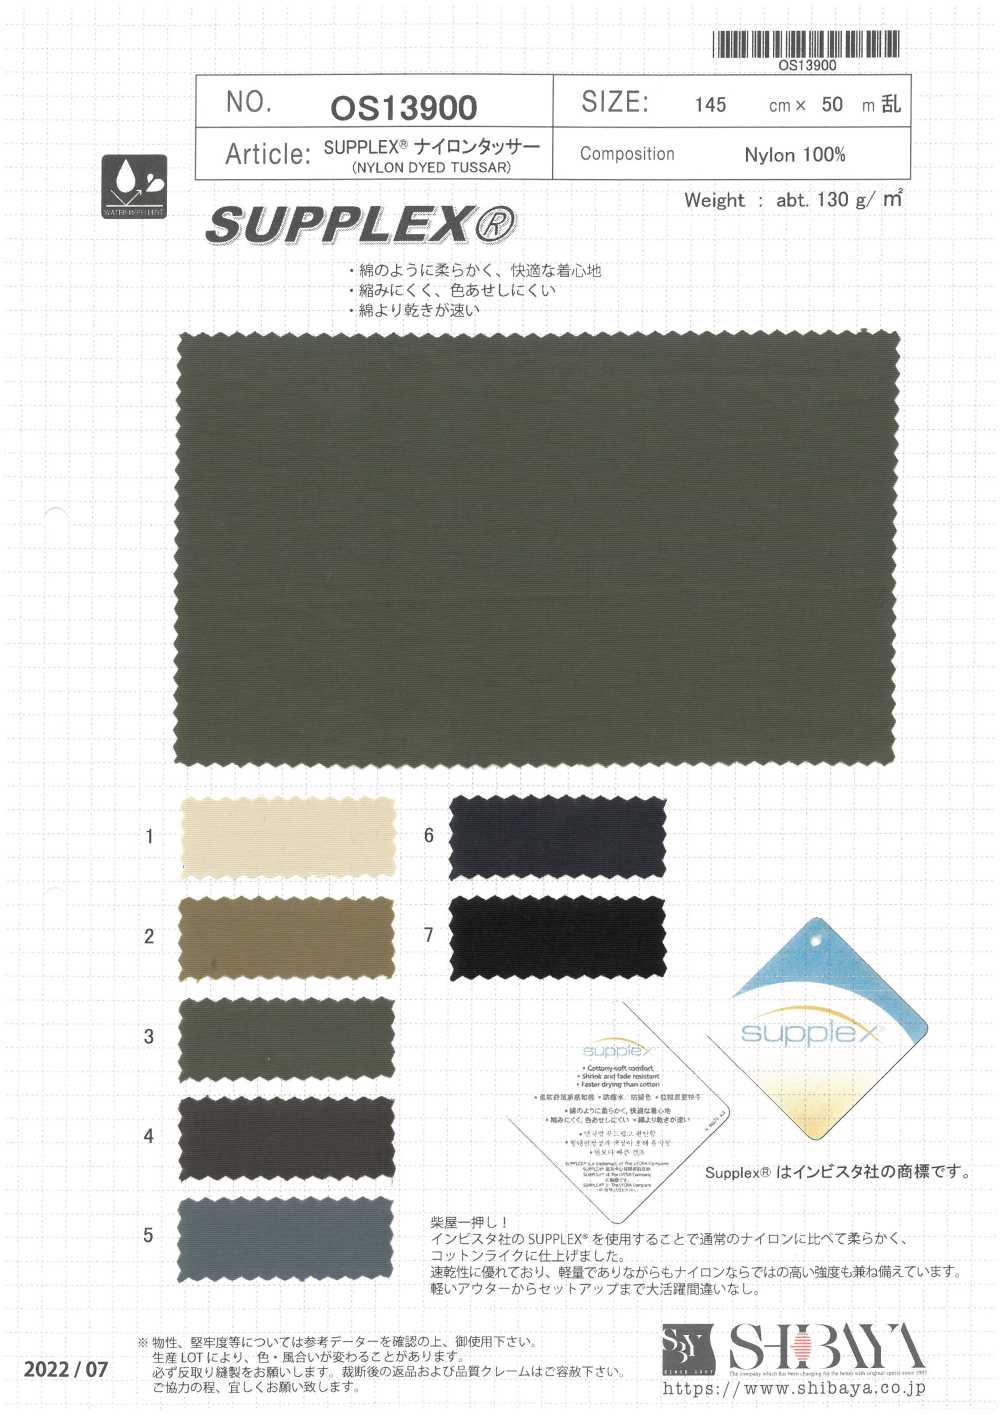 OS13900 SUPPLEX® Nylon Tussah[Vải] SHIBAYA